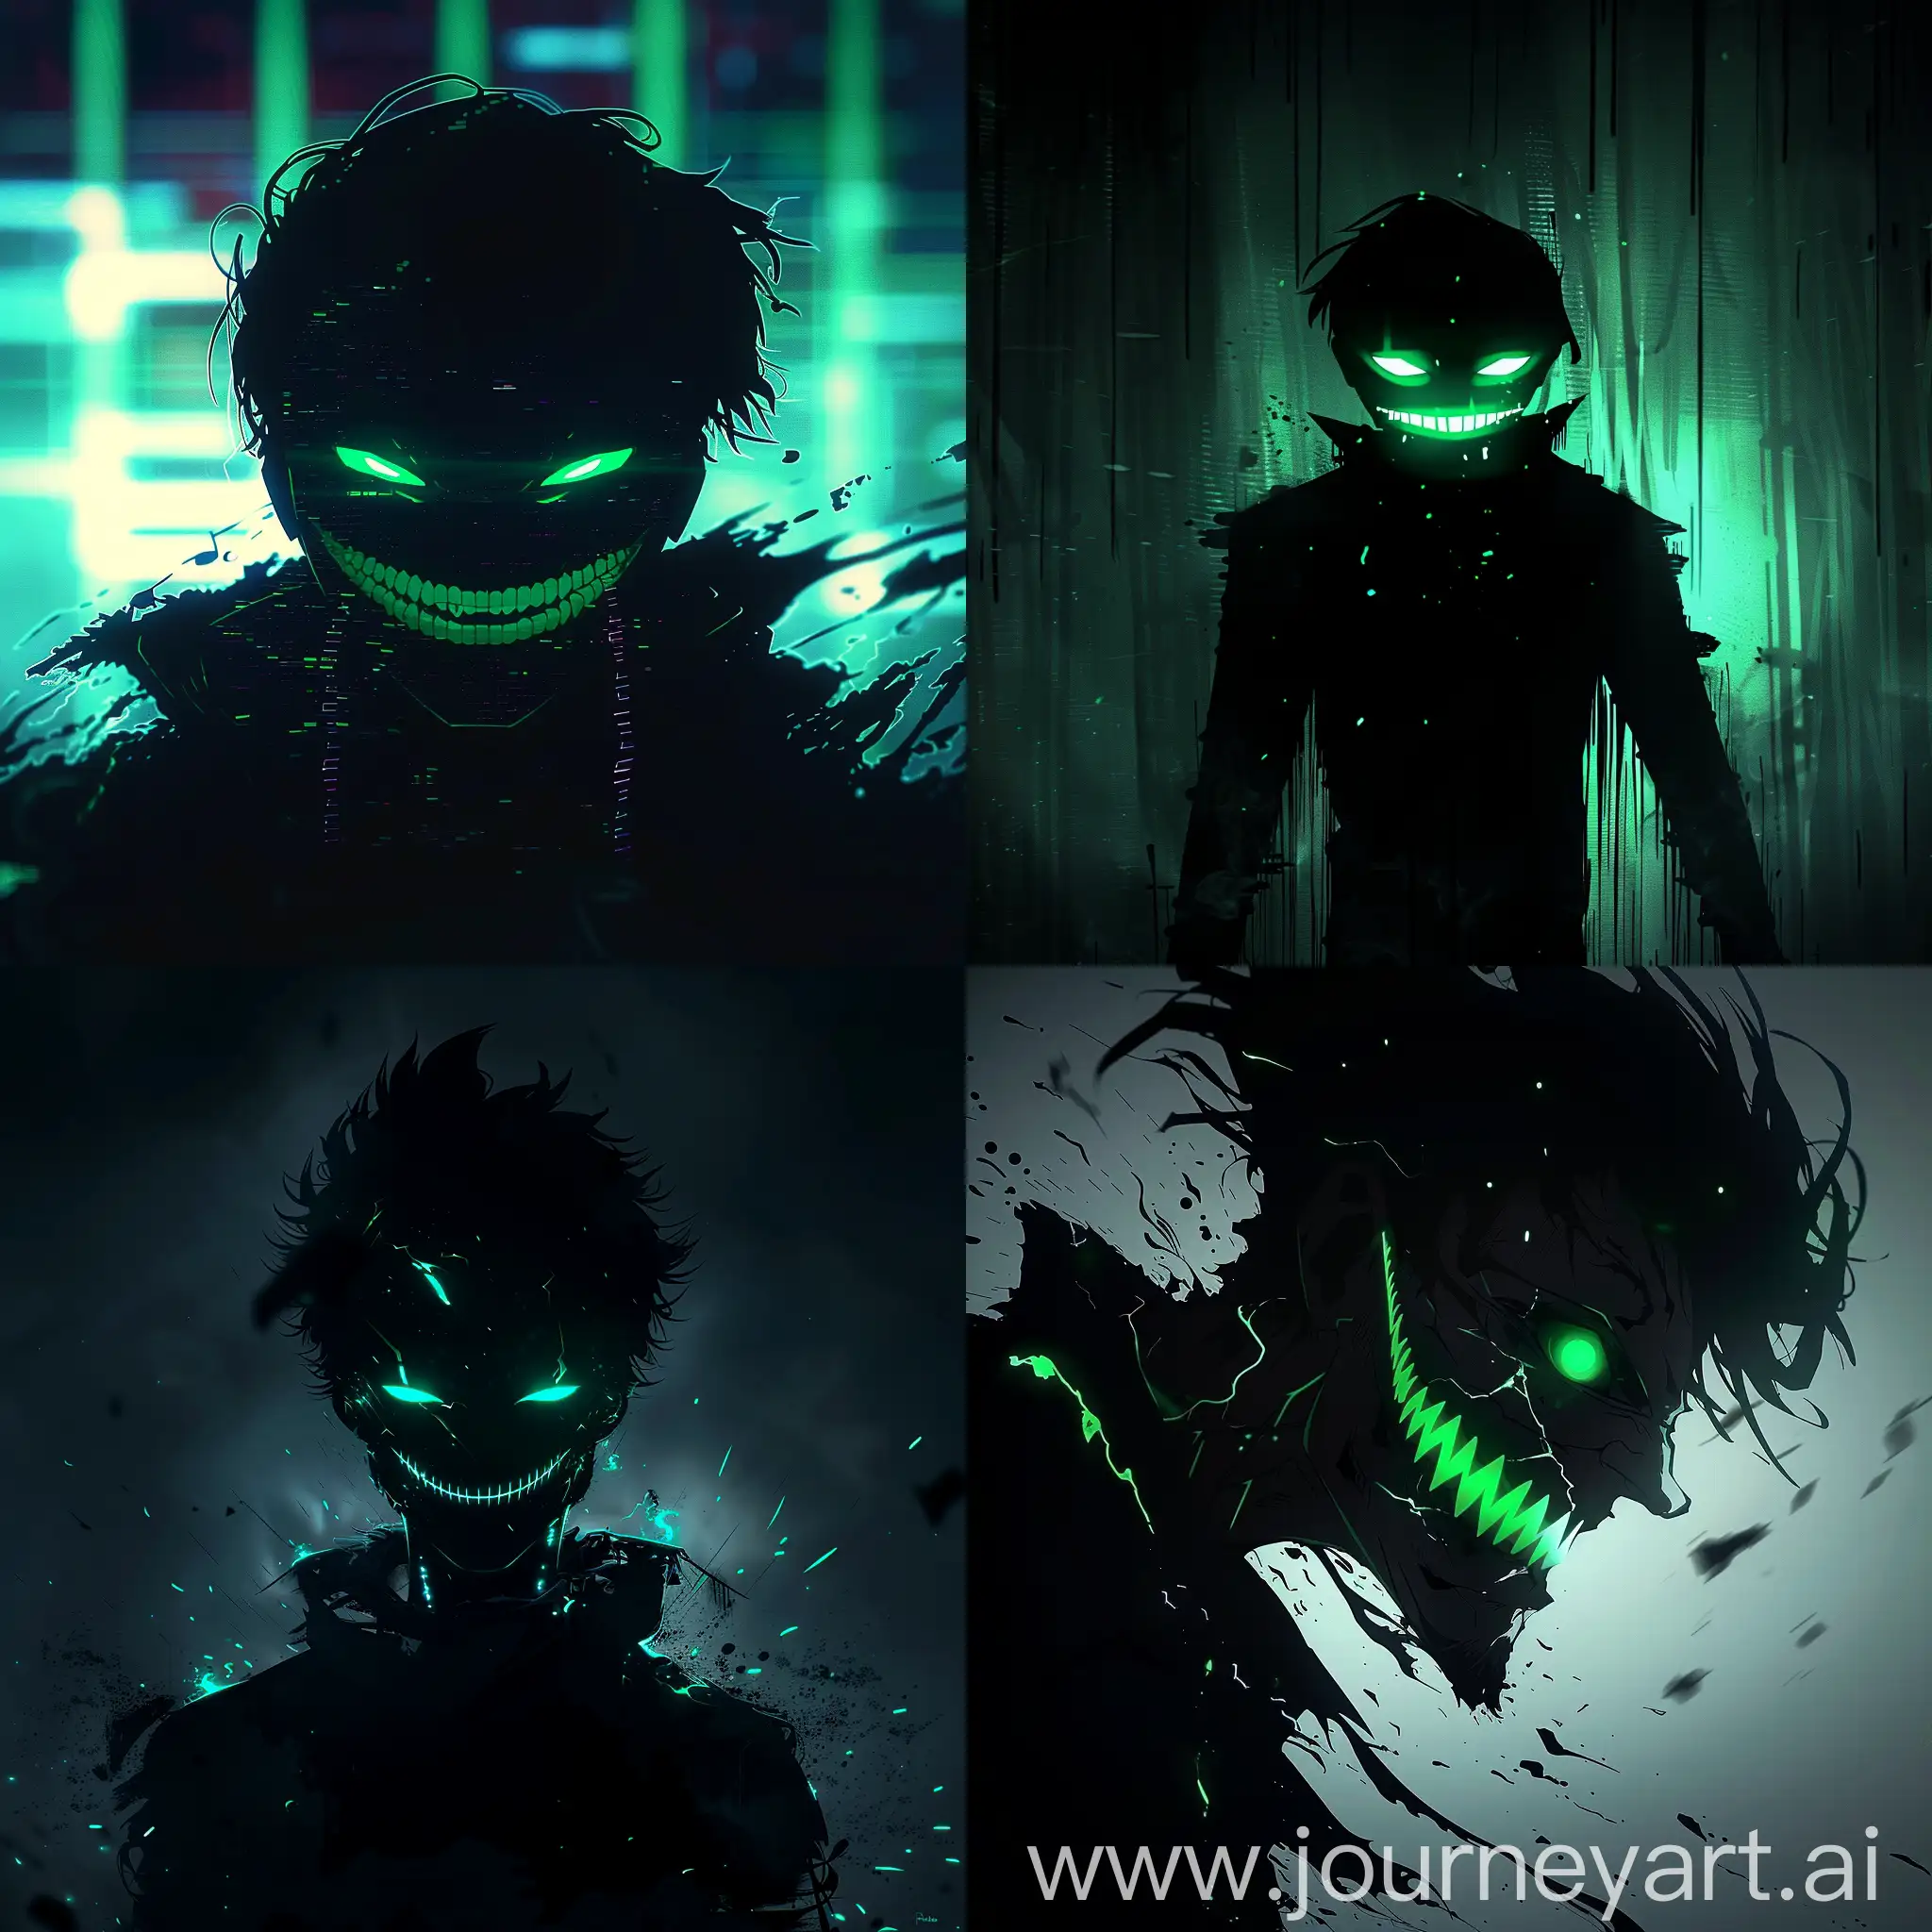 Dark-Anime-Villain-in-Limbo-Style-with-Glowing-Green-Eyes-Brazilian-Phonk-Artwork